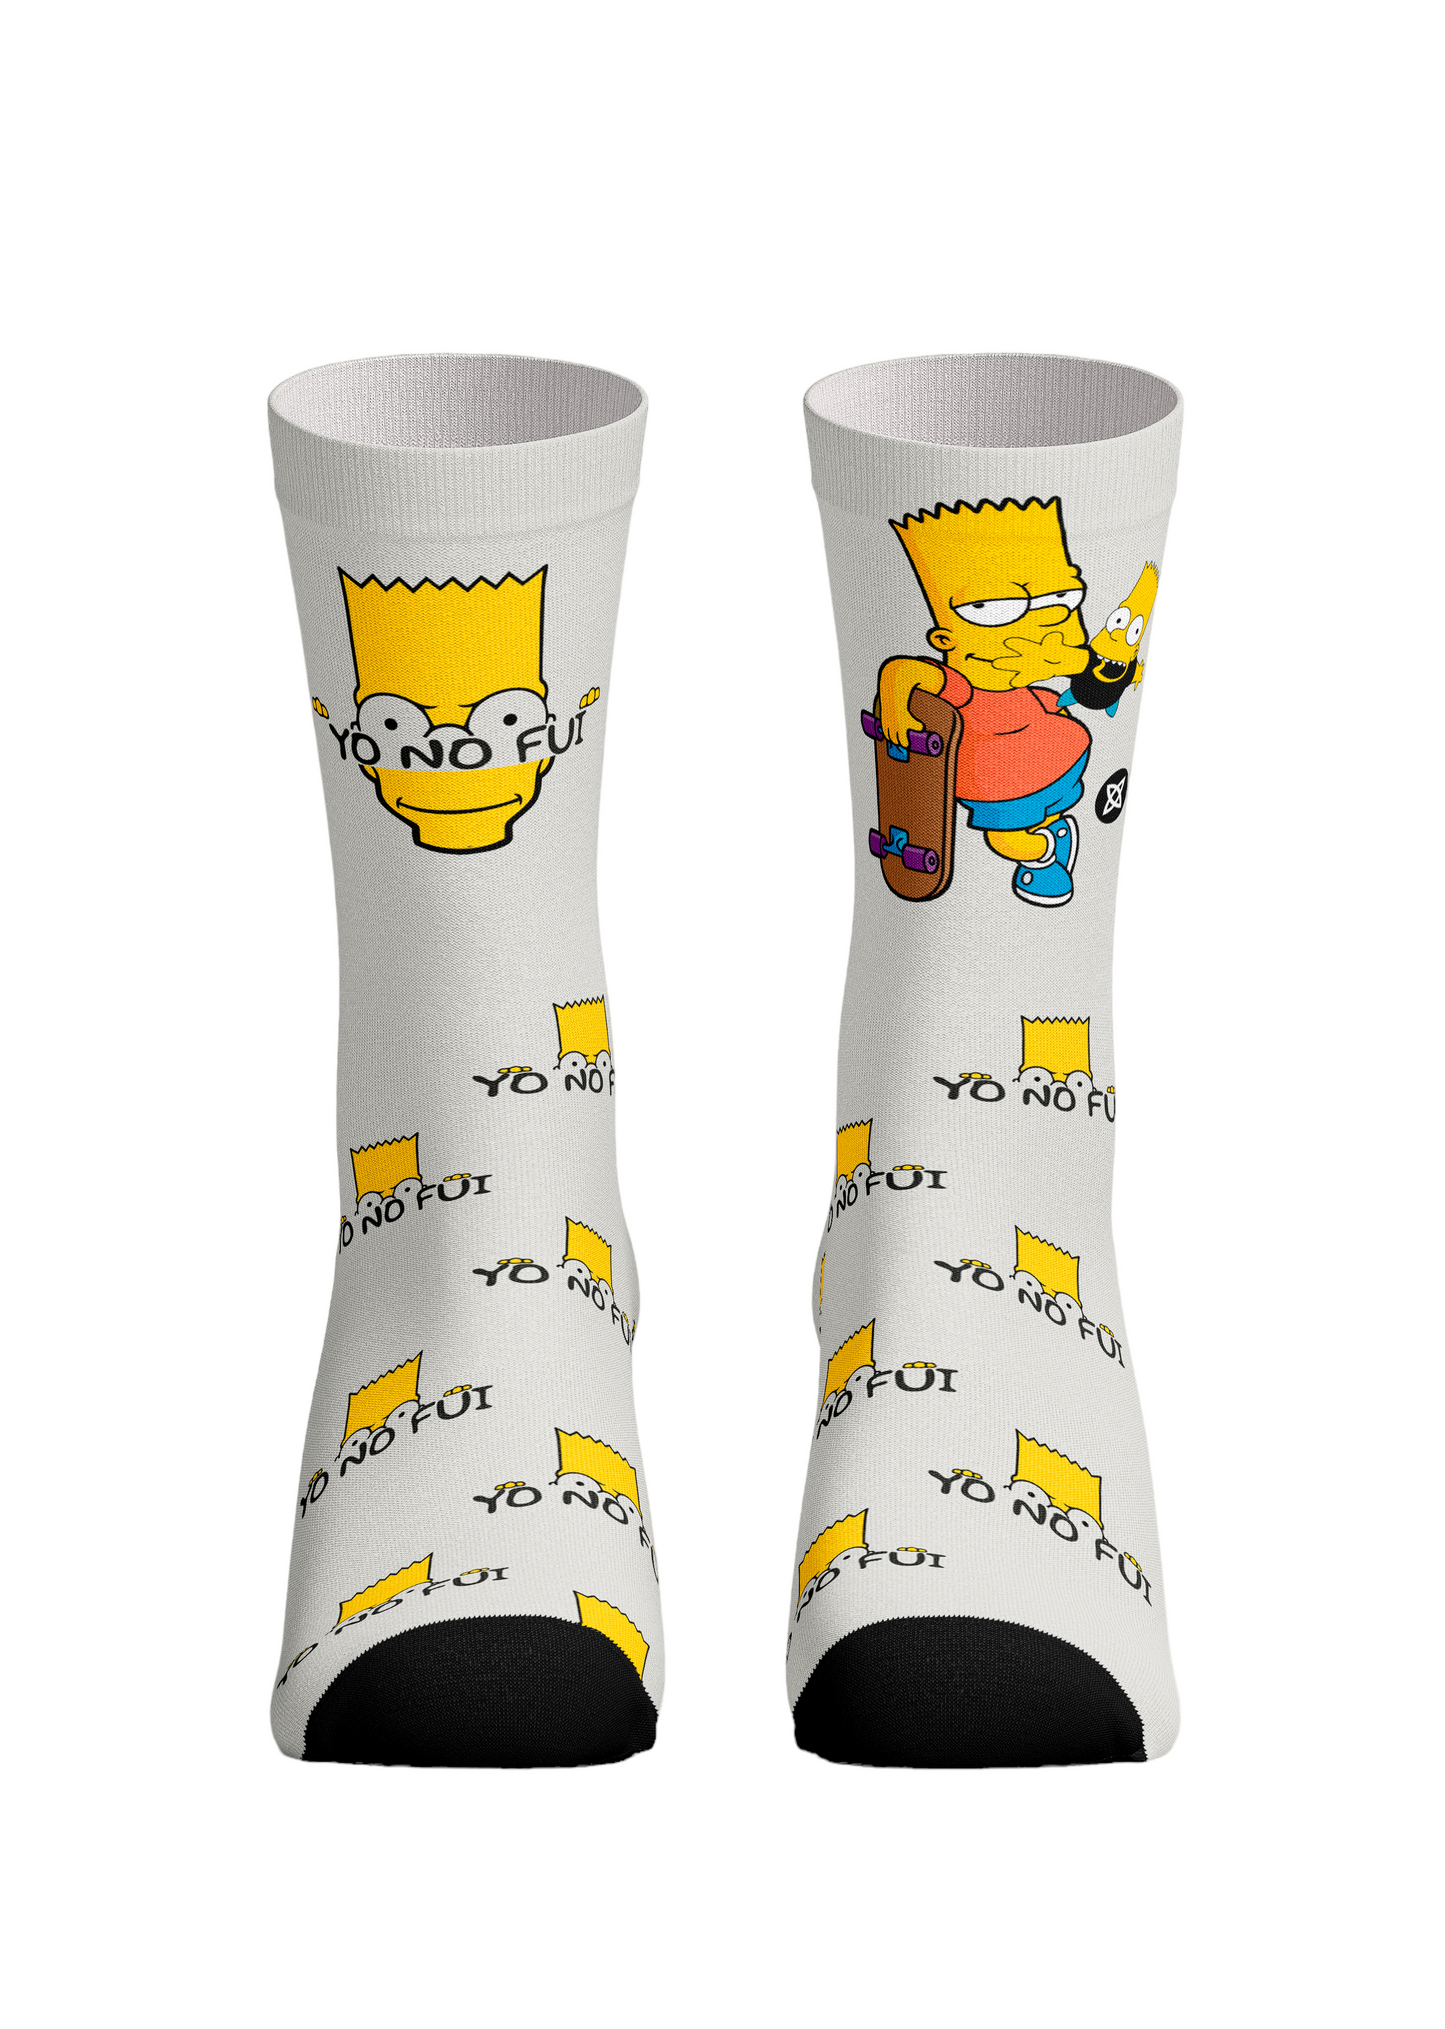 Calcetines Bart Simpsons "Yo no fui"